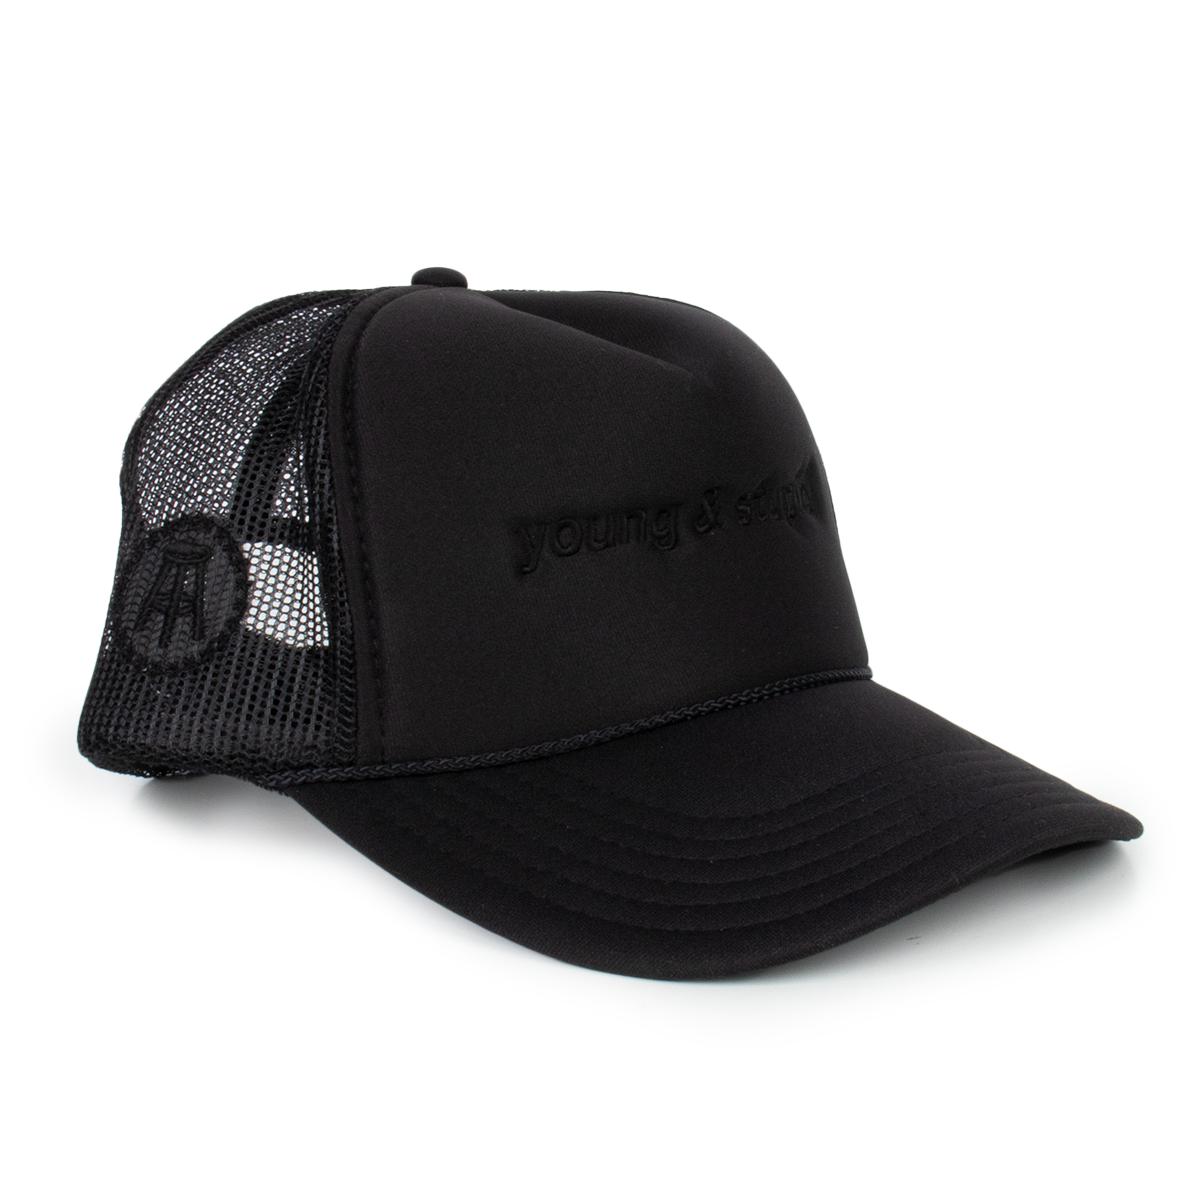 Young & Stupid Monochrome Trucker Hat-Hats-PlanBri Uncut-Black-One Size-Barstool Sports